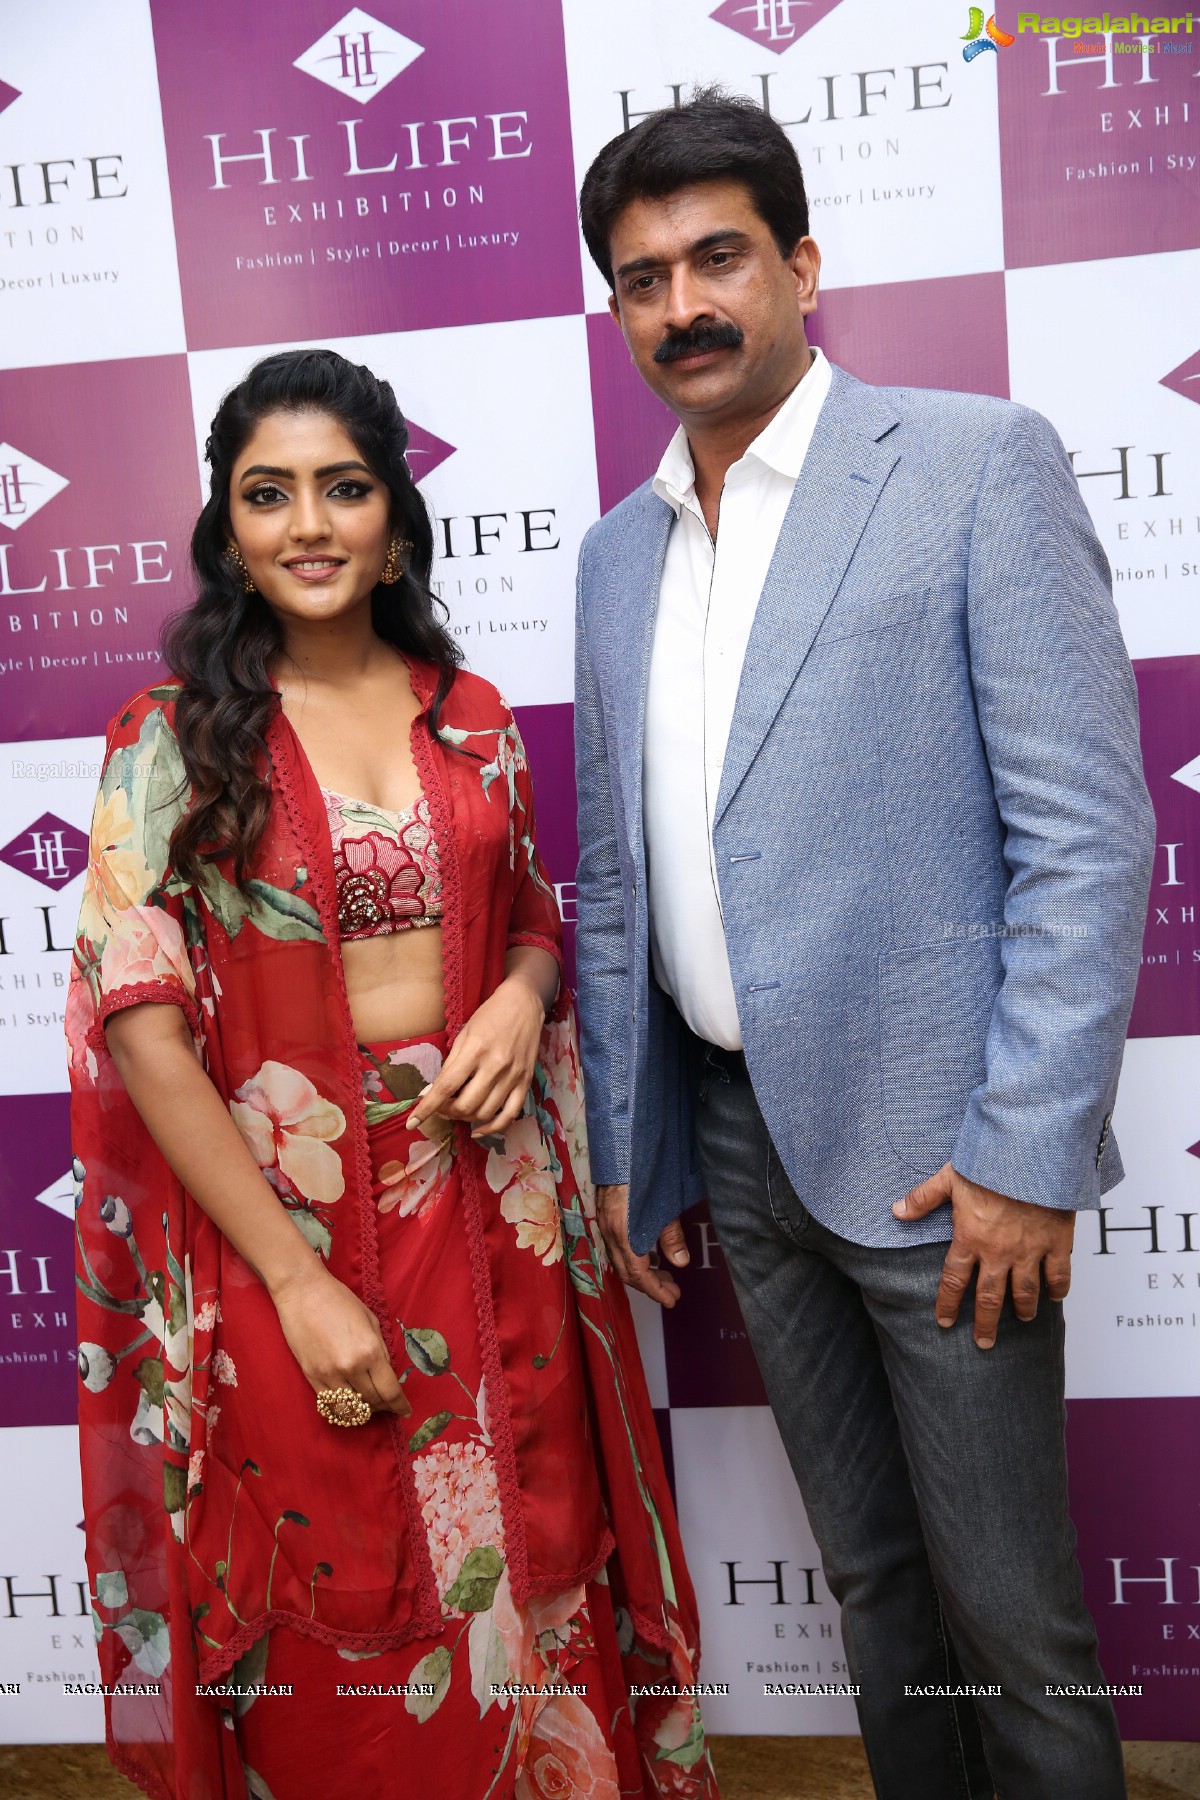 Hi-Life Exhibition, The Biggest Lifestyle Luxury Exhibition Kicks Off at HICC (Novotel) Hyderabad